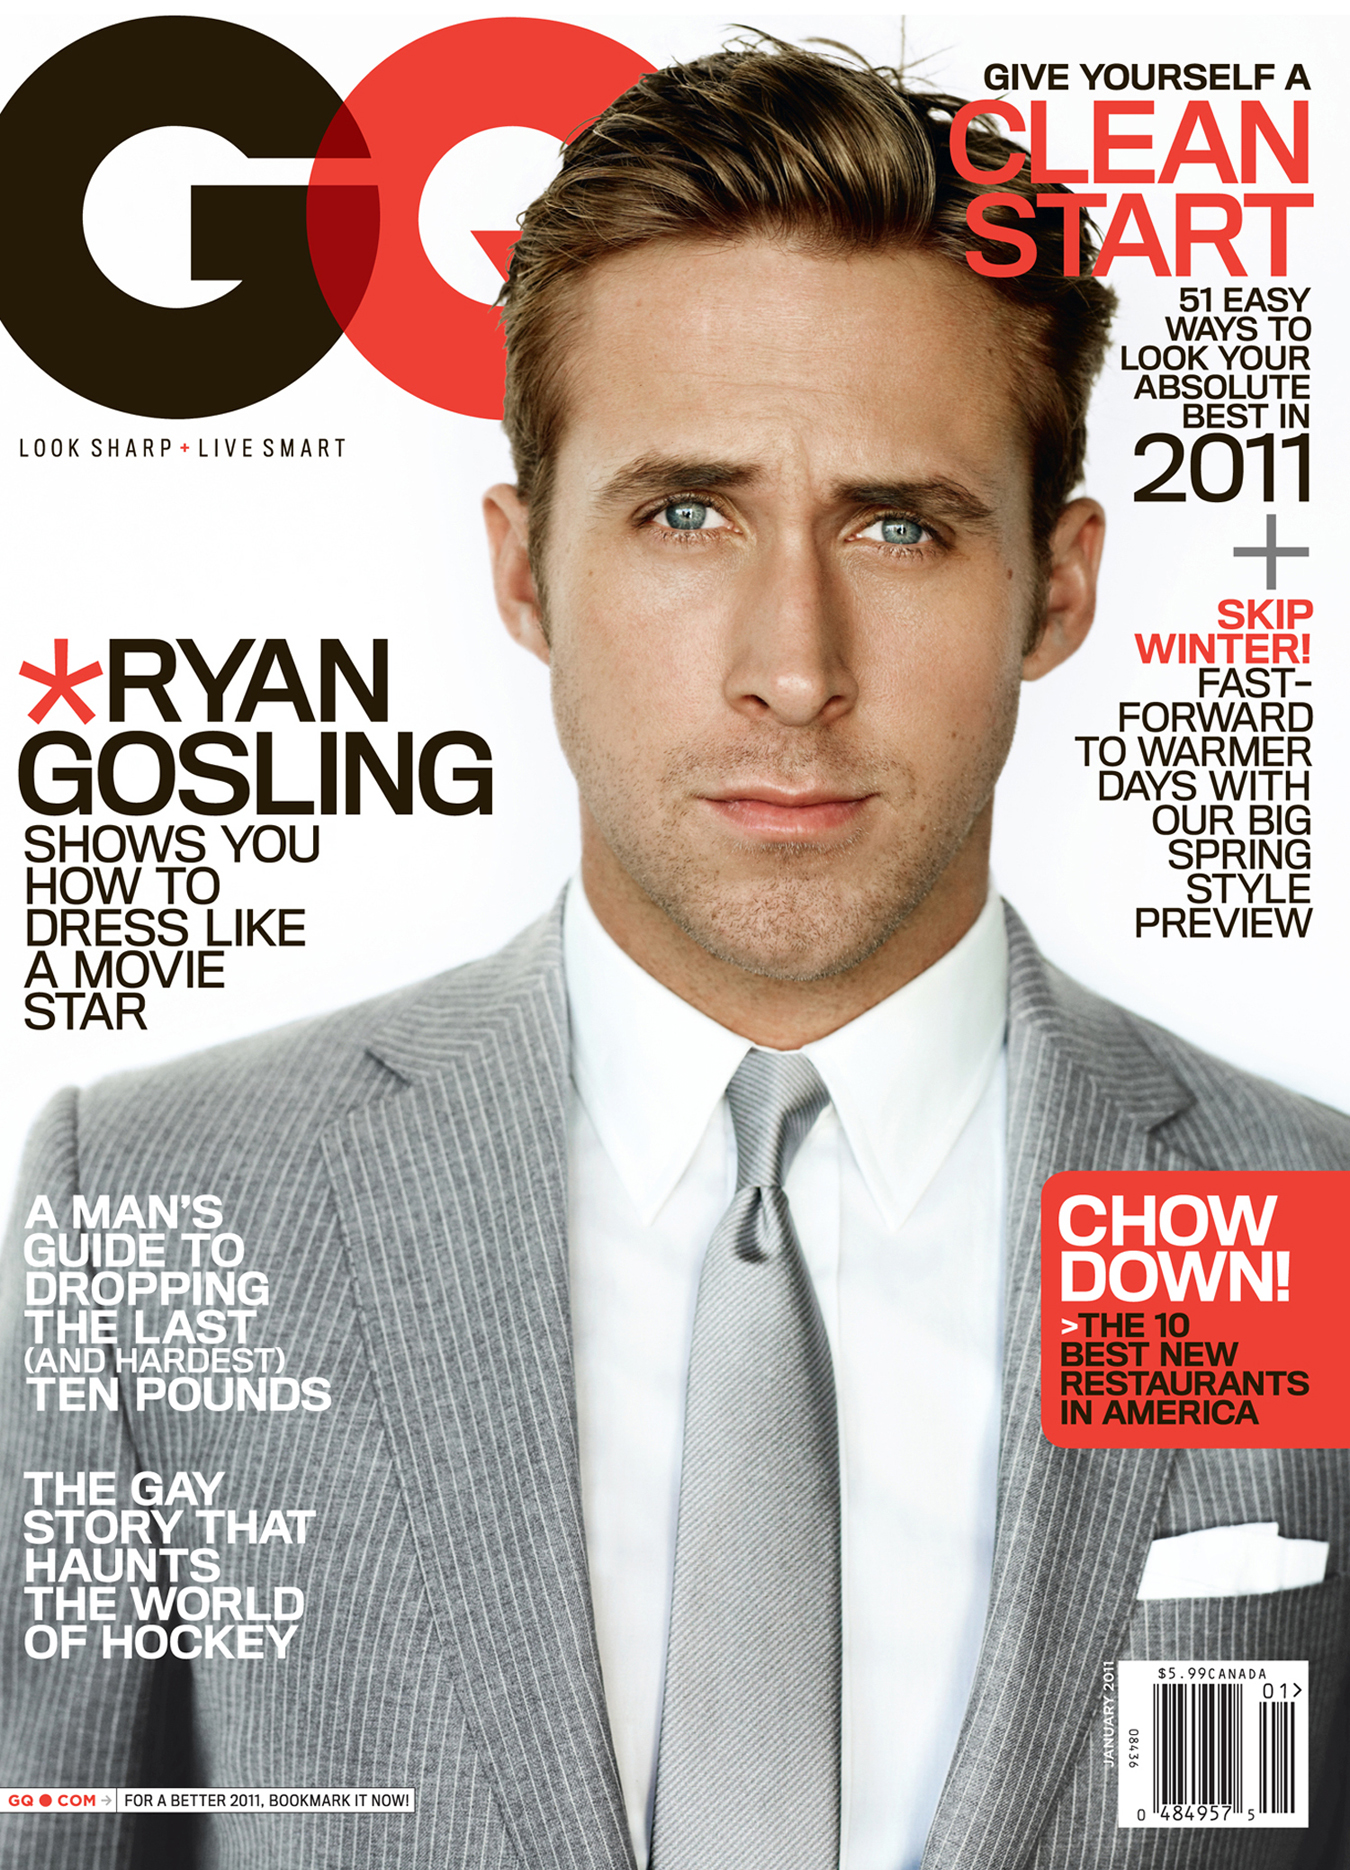 Gq magazine